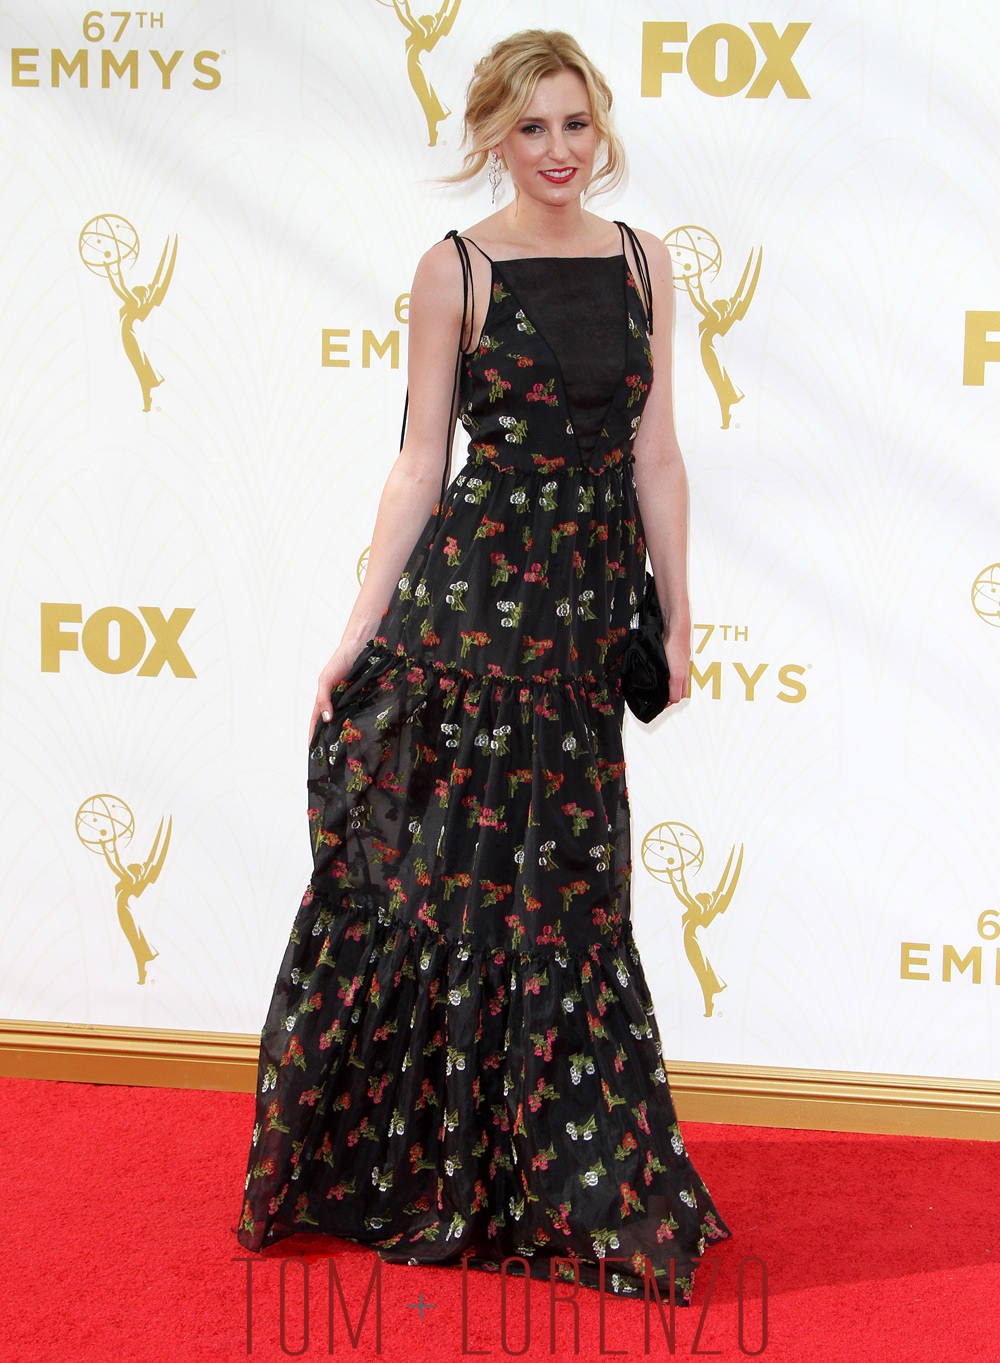 Laura-Carmichael-2015-Emmy-Awards-Red-Carpet-Fashion-Tom-Lorenzo-Site-TLO (1)